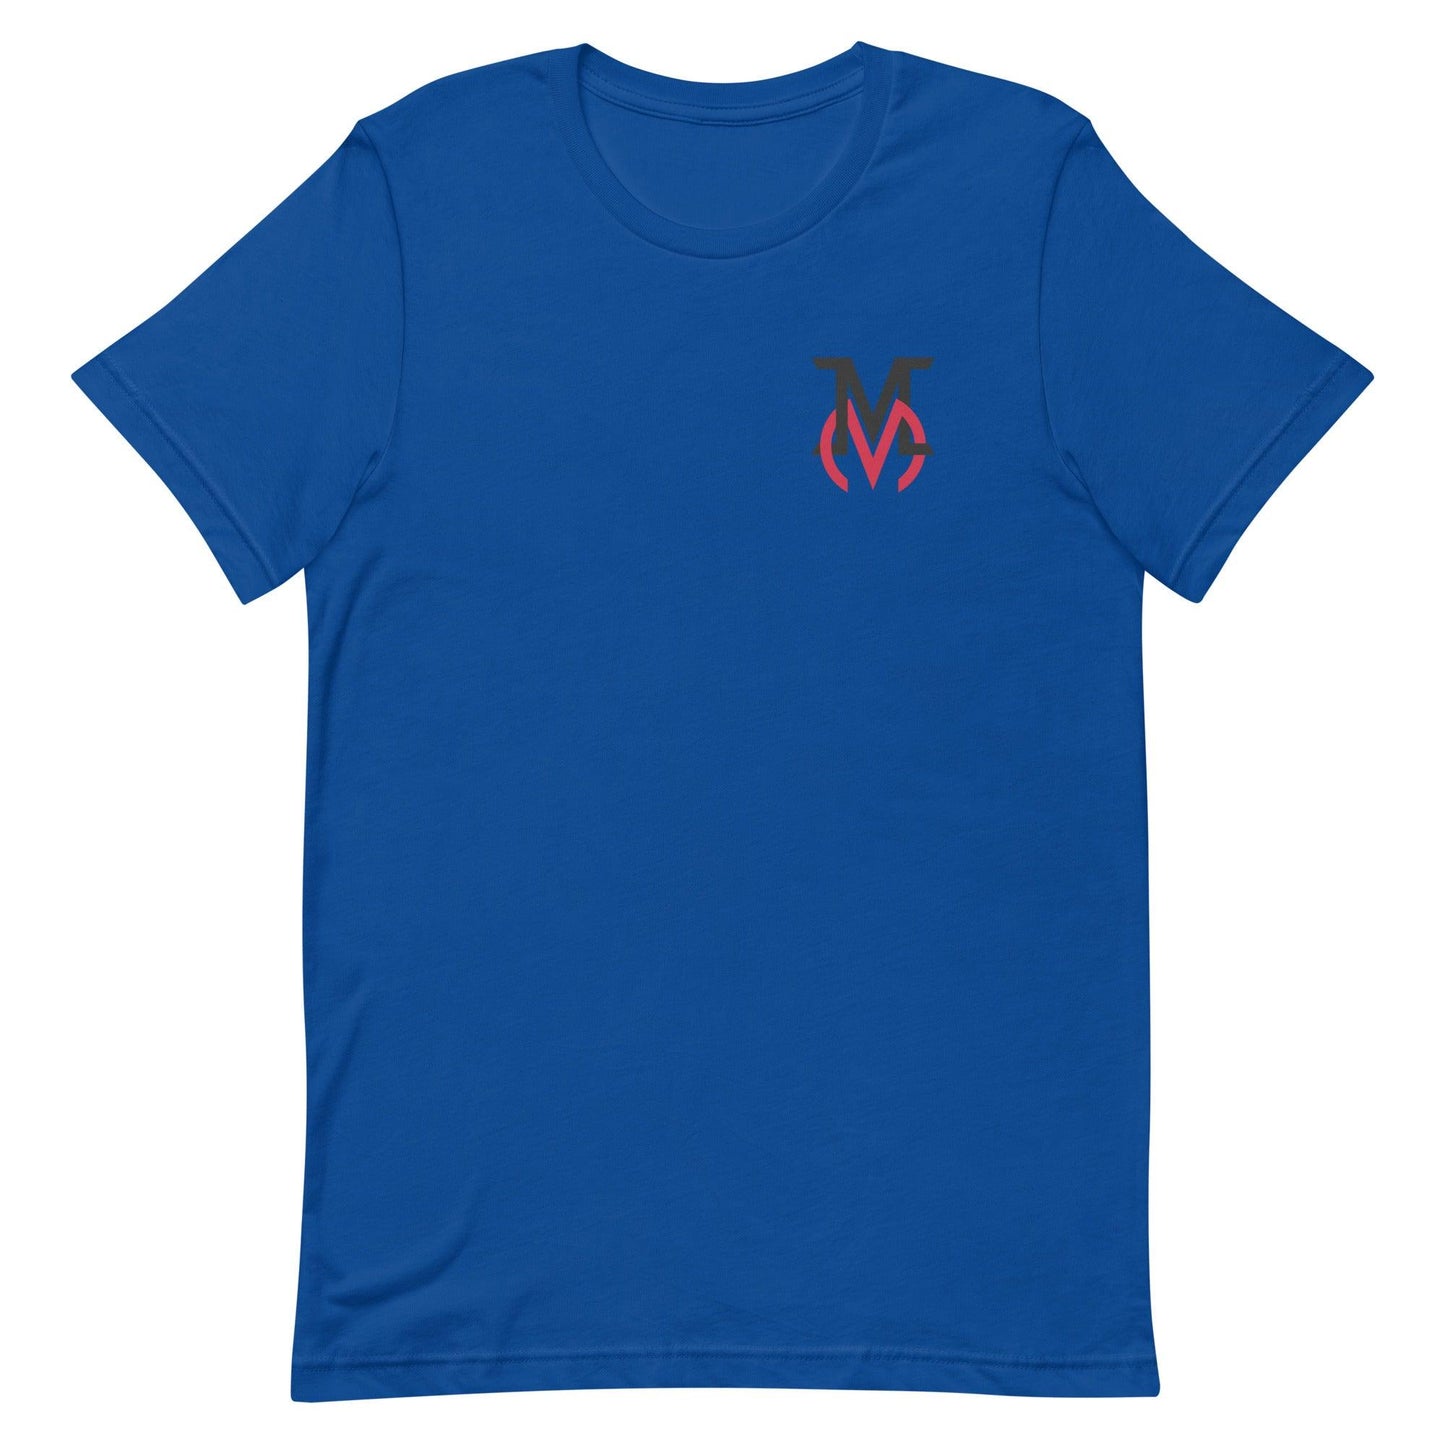 Mike Minor "Essentials" t-shirt - Fan Arch